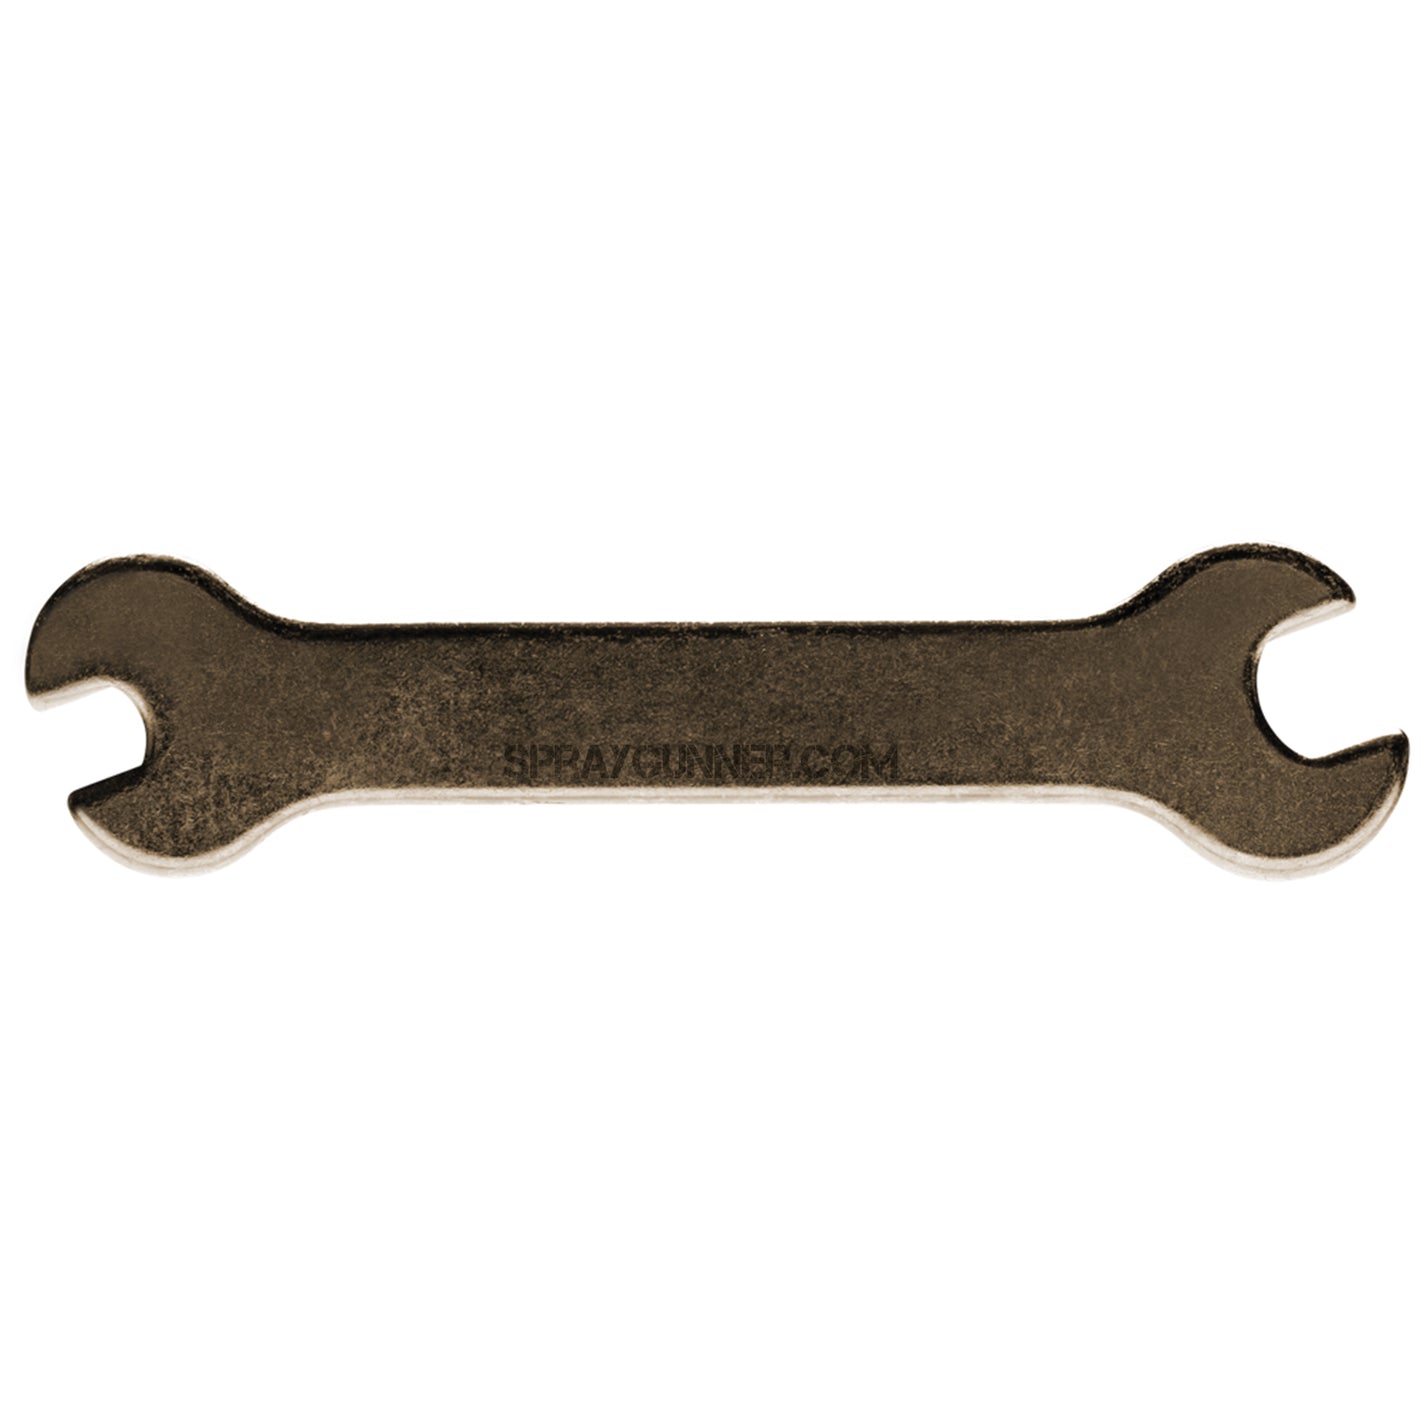 Iwata Spanner Wrench I1653 Iwata